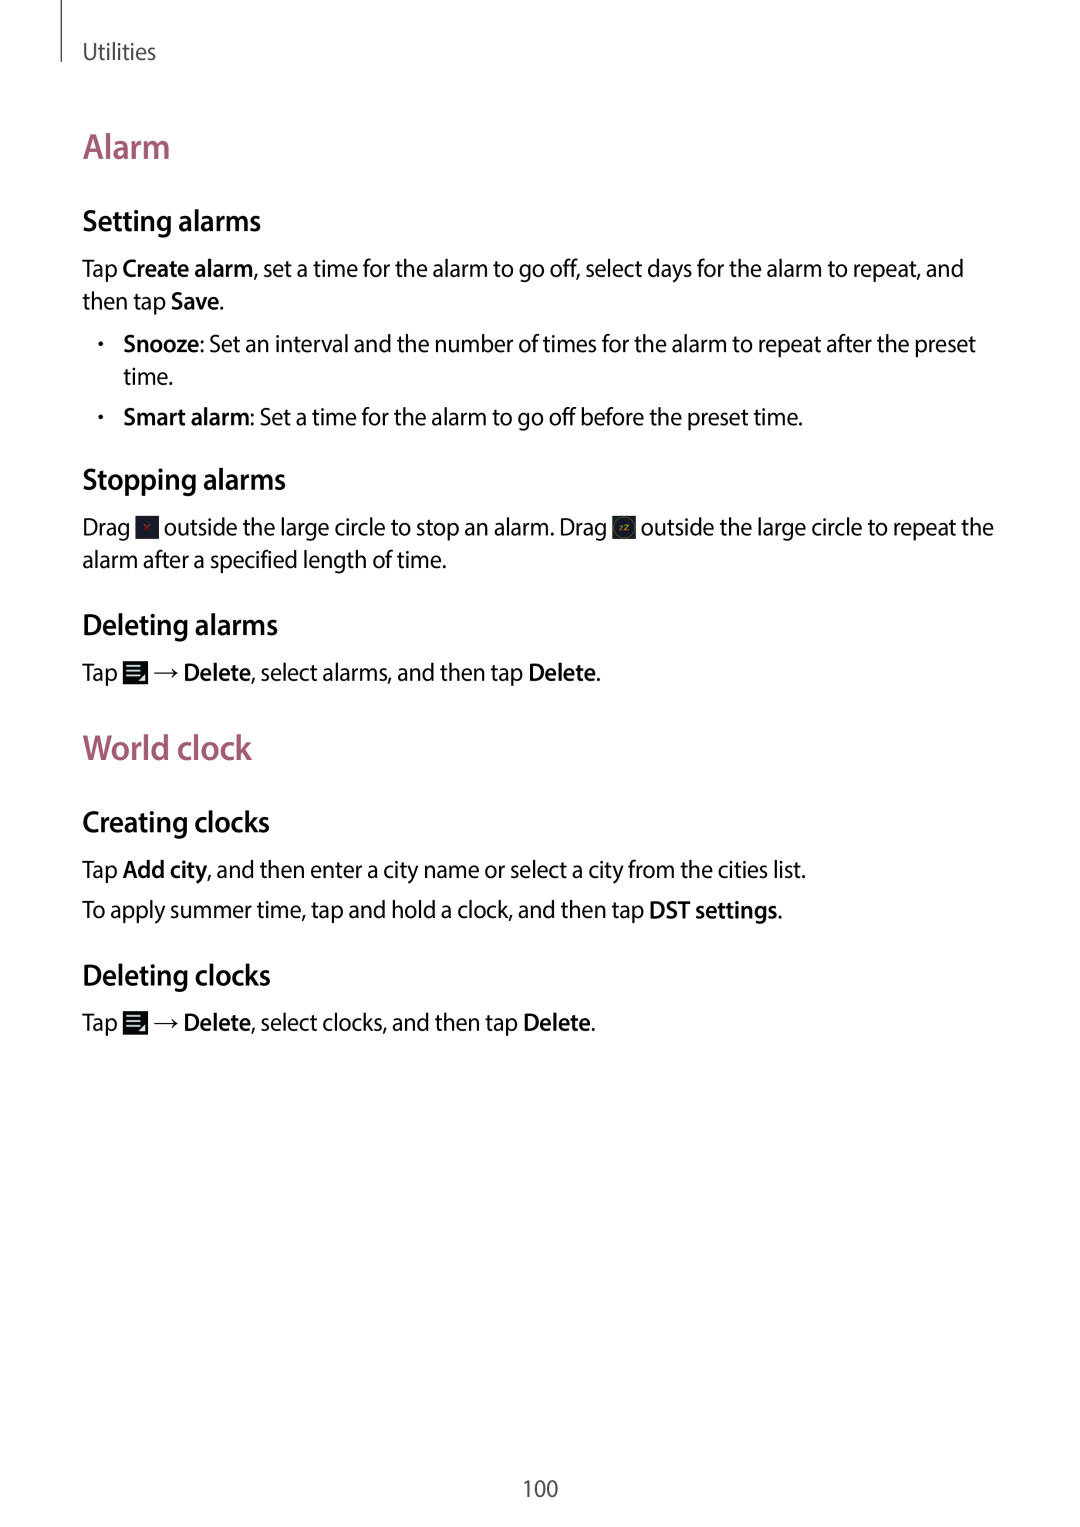 Samsung EK-GC100 Alarm, World clock, Setting alarms, Stopping alarms, Deleting alarms, Creating clocks, Deleting clocks 